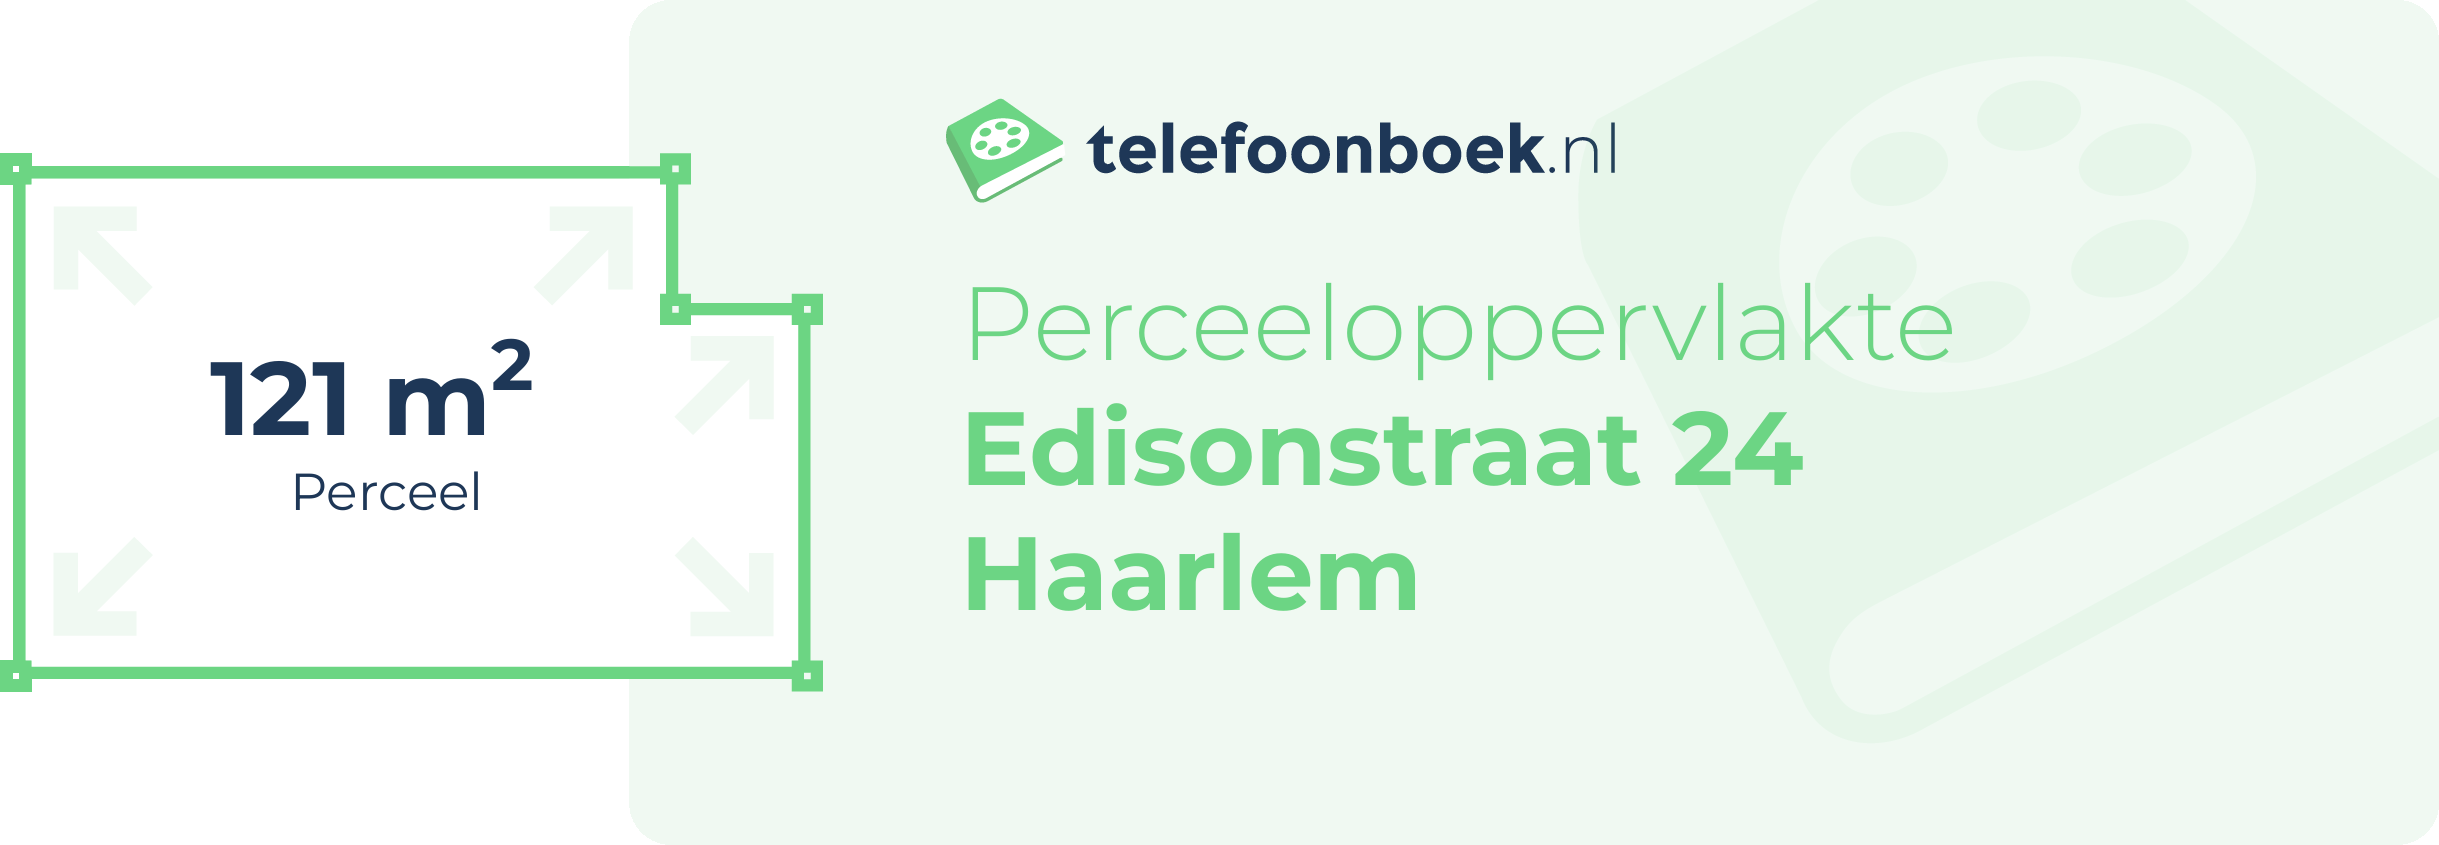 Perceeloppervlakte Edisonstraat 24 Haarlem